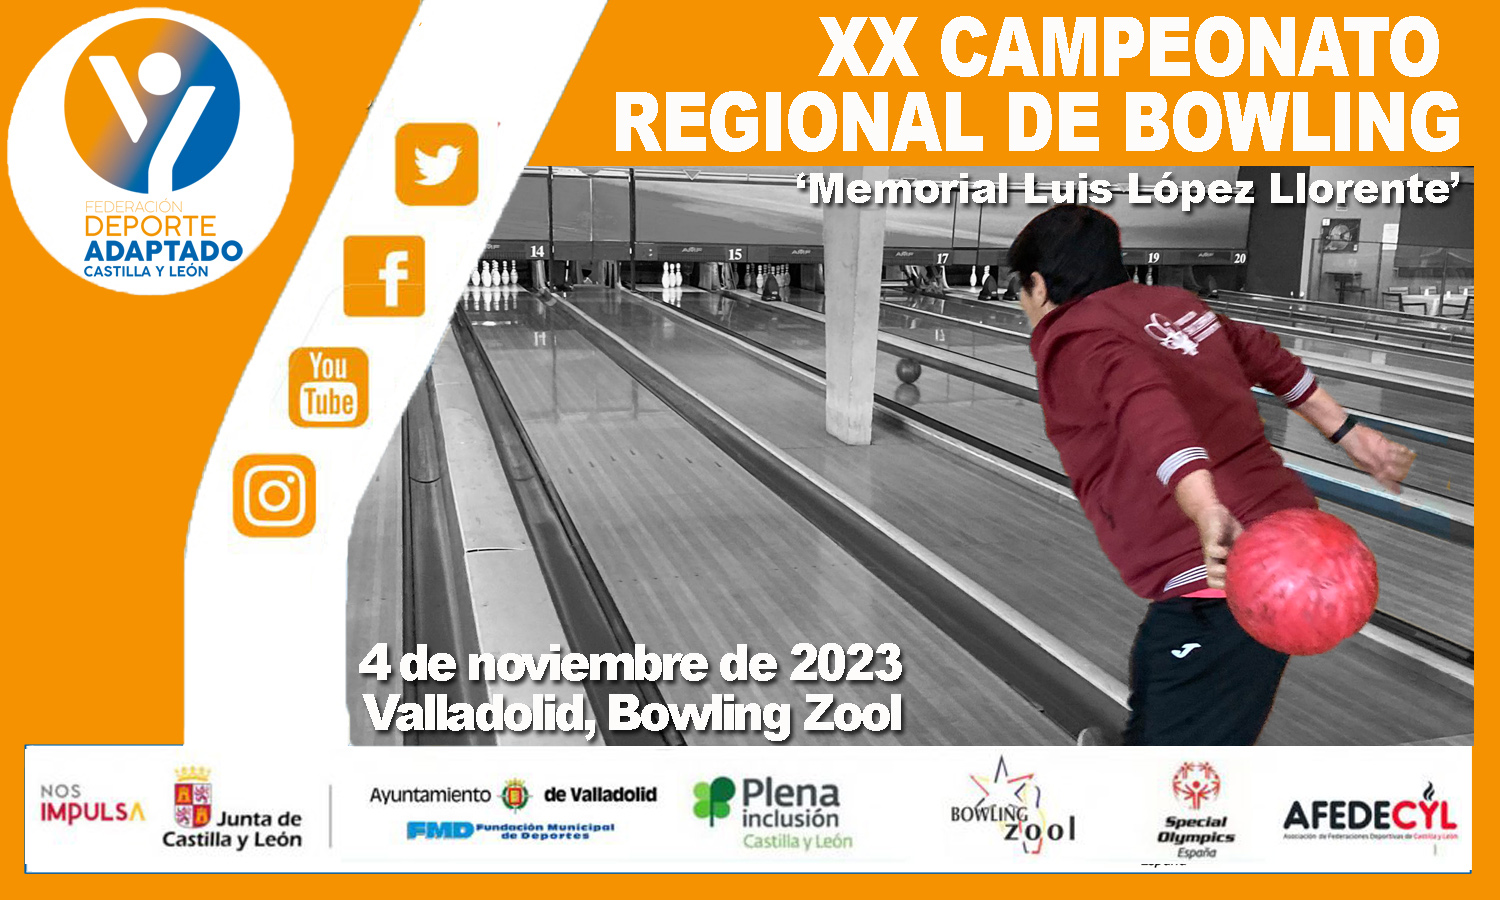 XX Campeonato Regional de Bowling